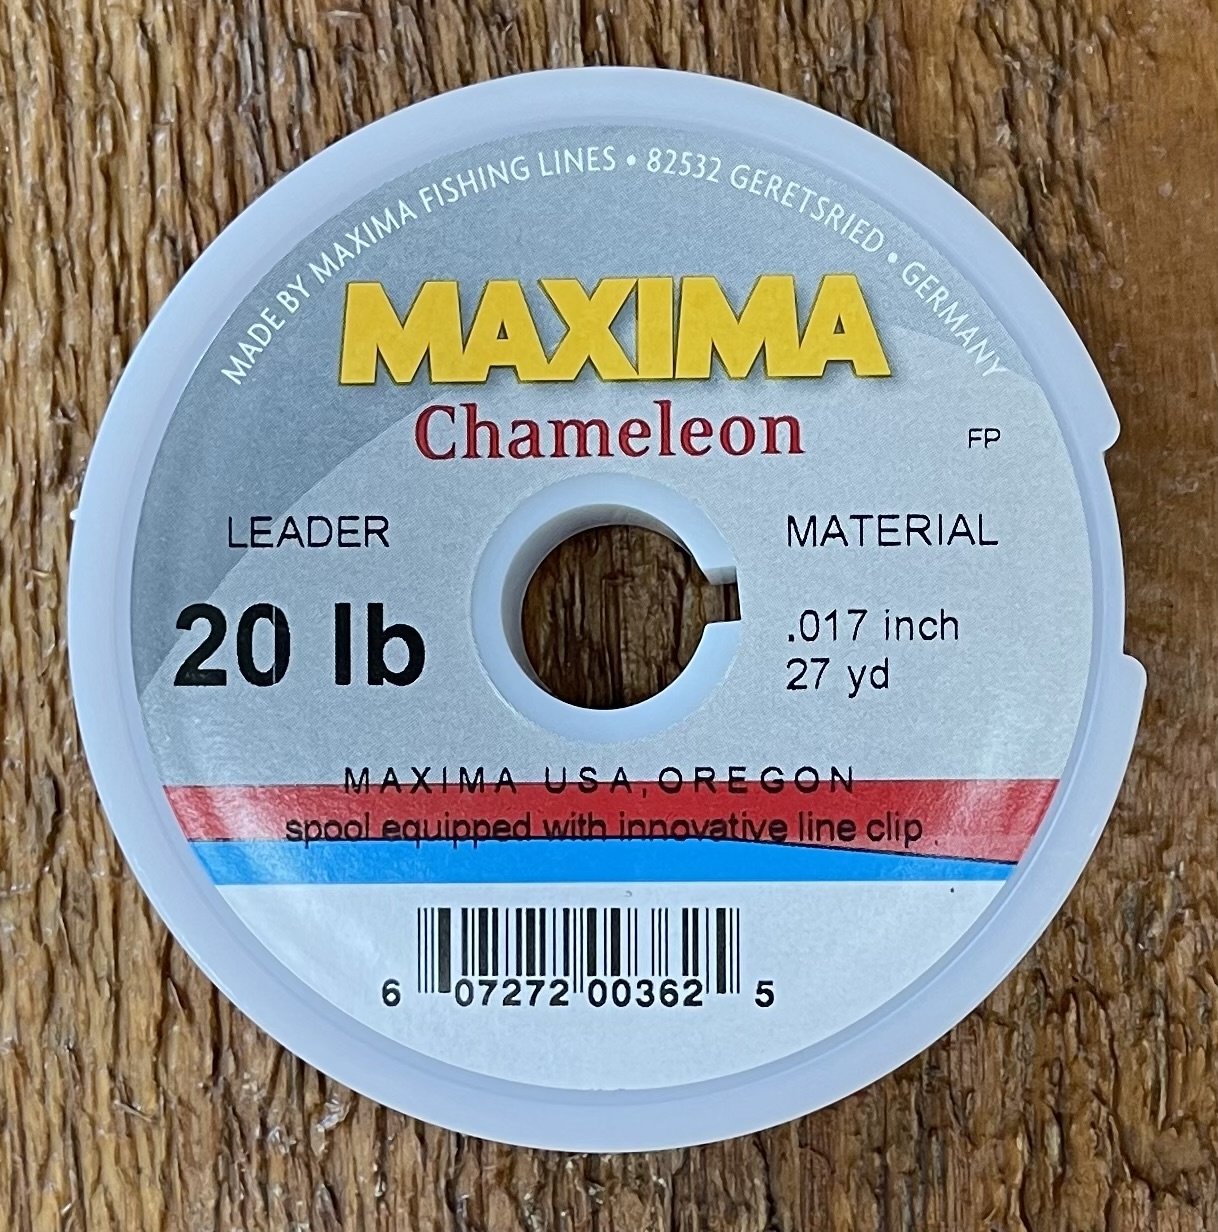 Maxima Chameleon Leader Material 27yd Spool